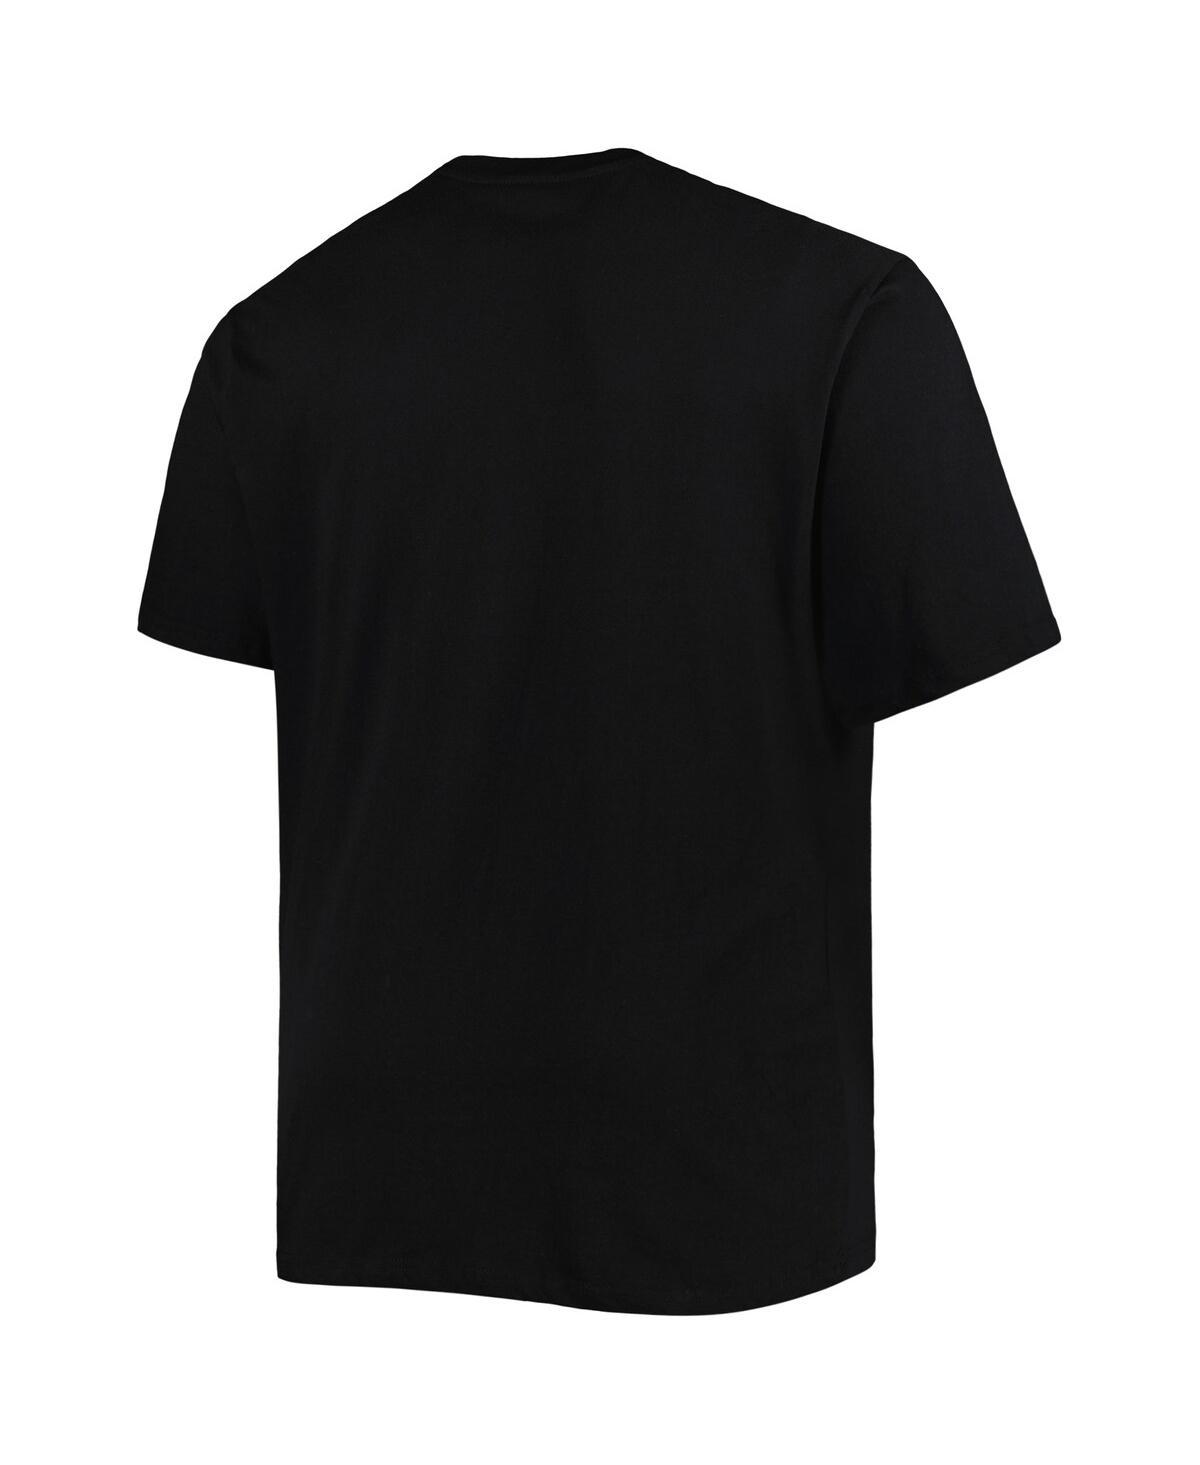 Seattle kraken fanatics branded authentic pro tech 2023 shirt